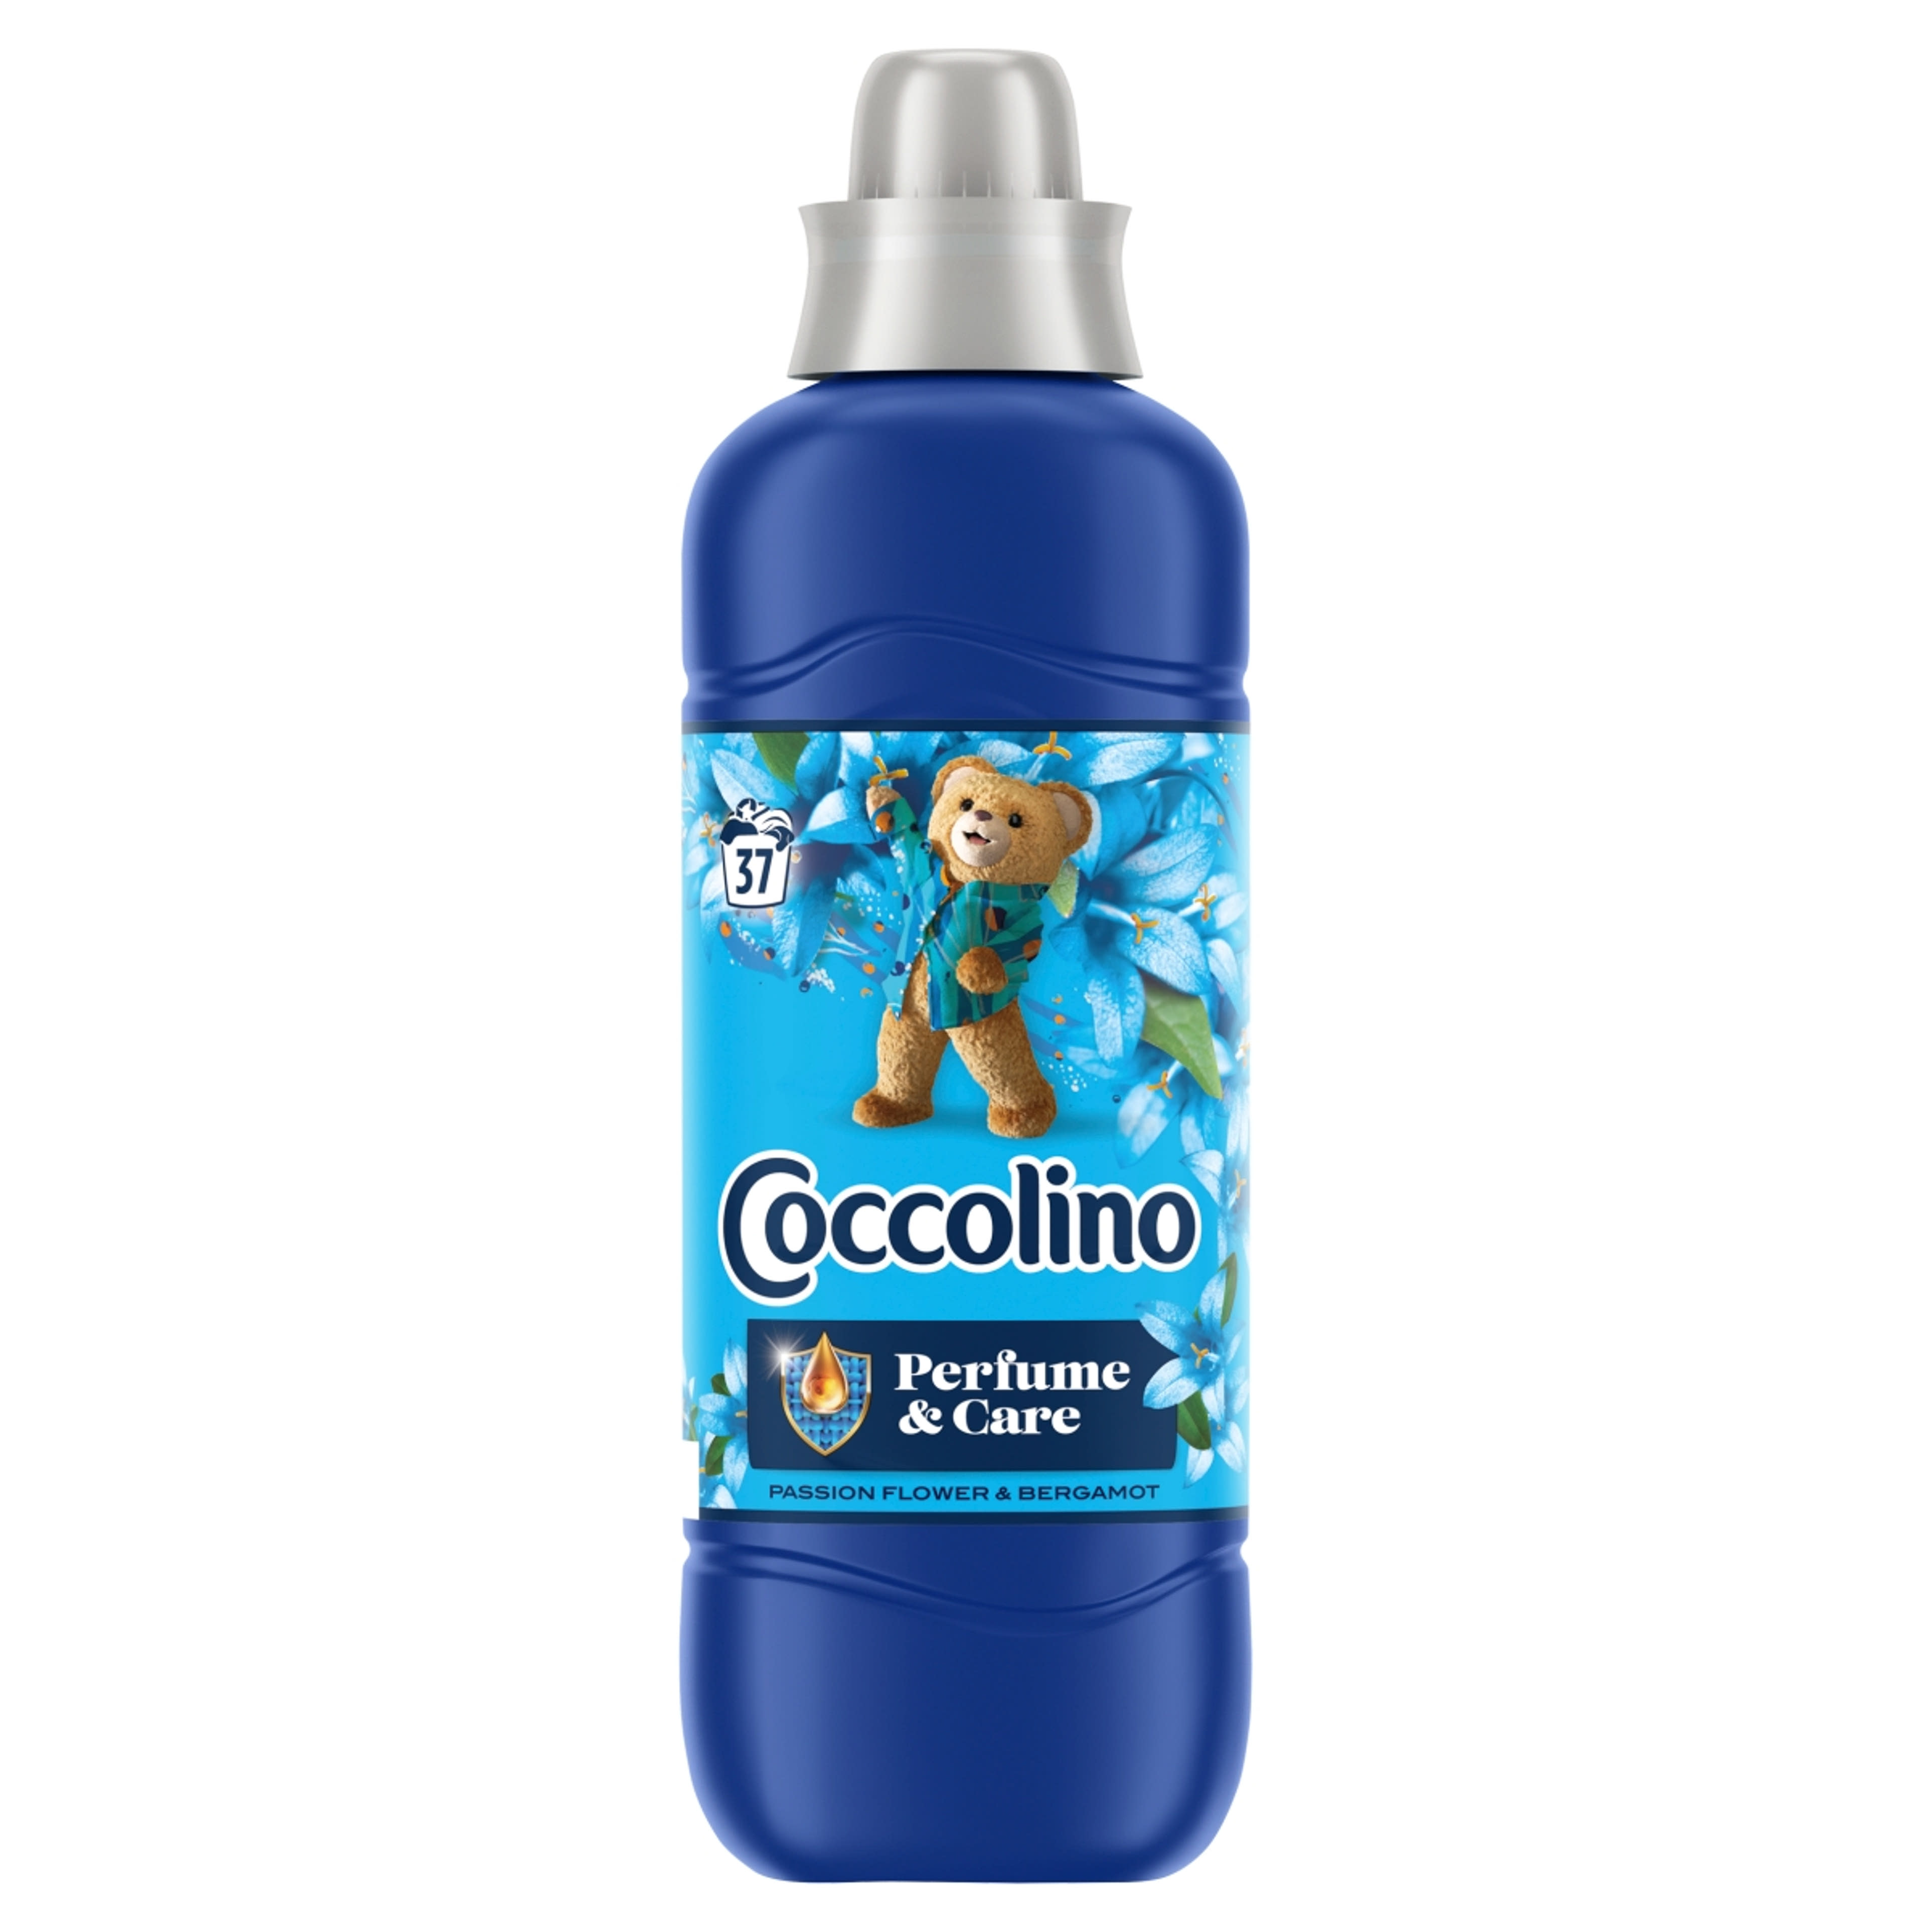 Coccolino Perfume & Care Passion Flow & Bergamot öblítőkoncentrátum - 925 ml